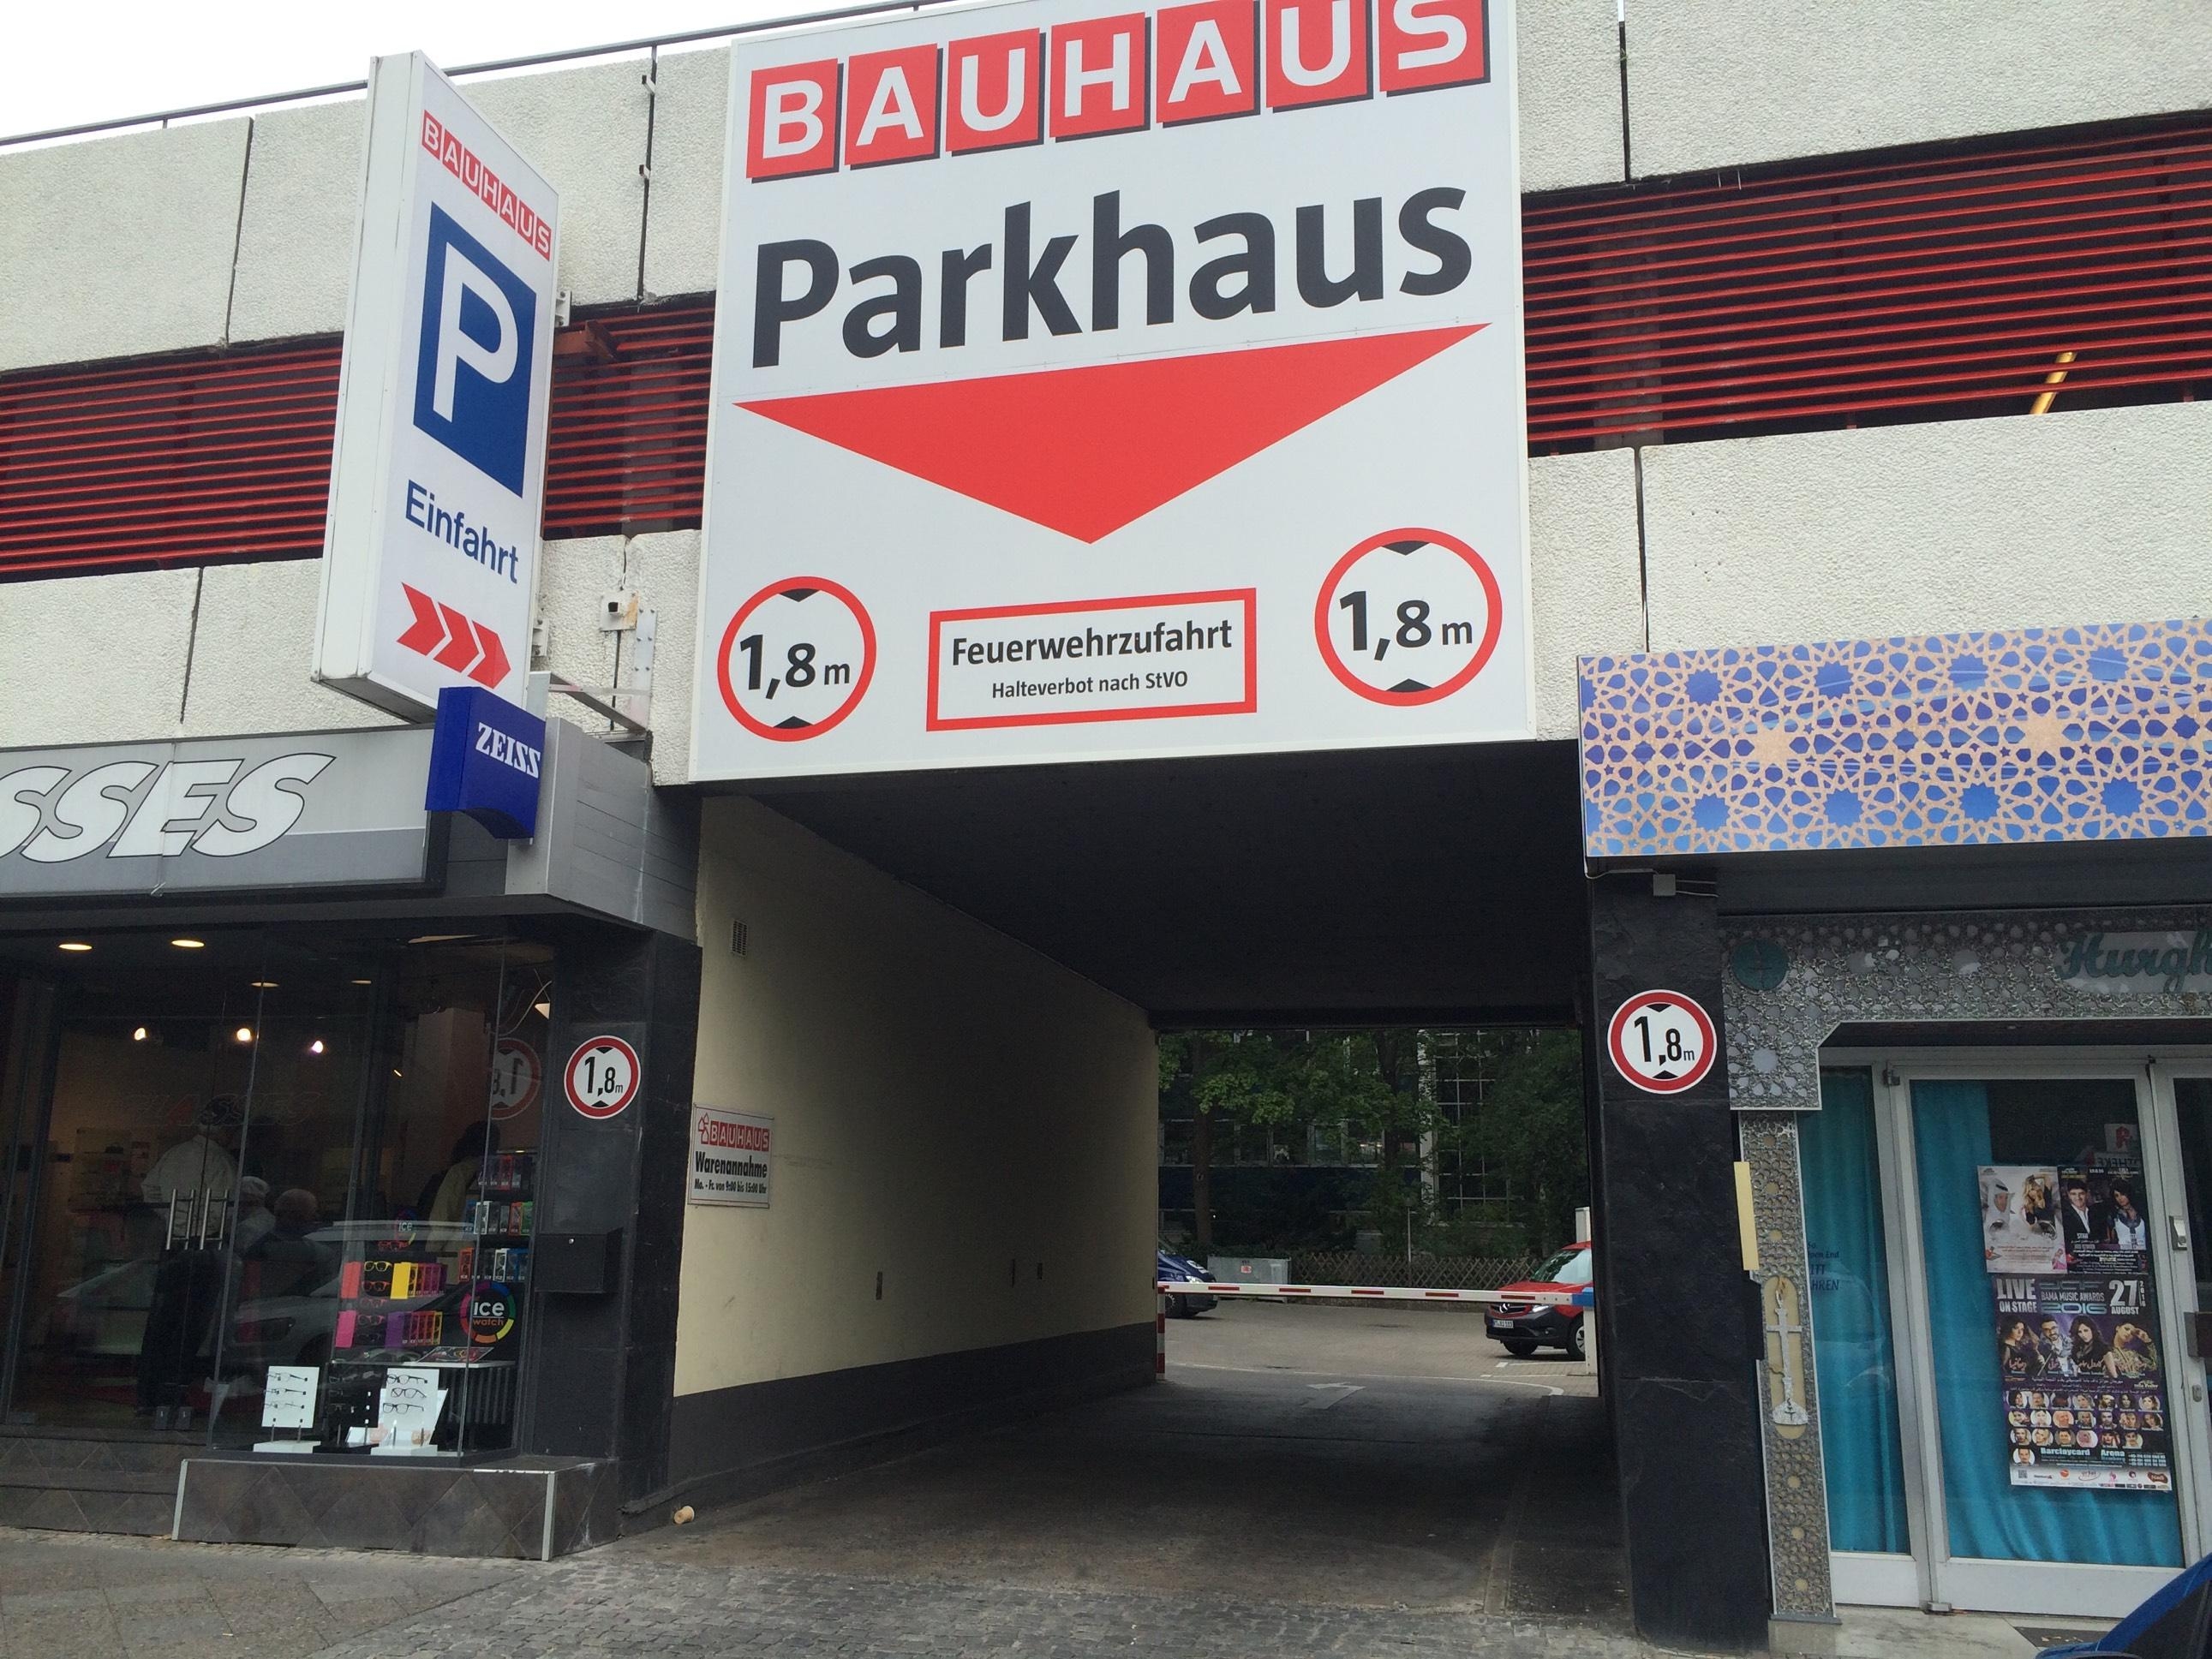 Bauhaus Parkhaus Parkplatz In Berlin Parkme